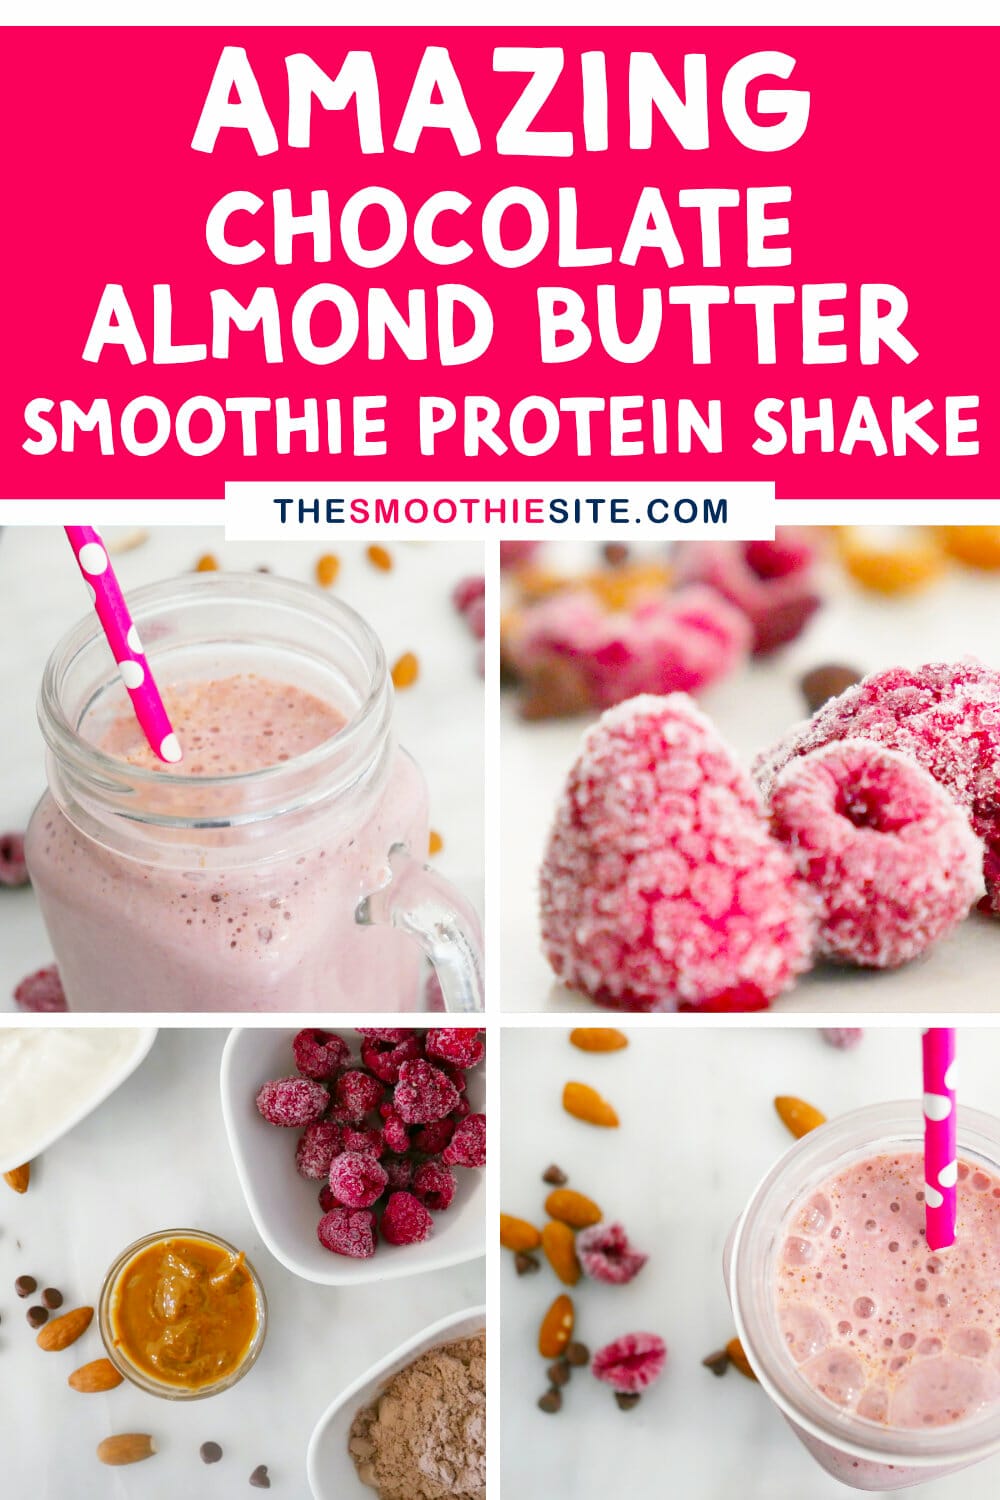 AMAZING Chocolate almond butter smoothie protein shake (+ Tips!) via @thesmoothiesite